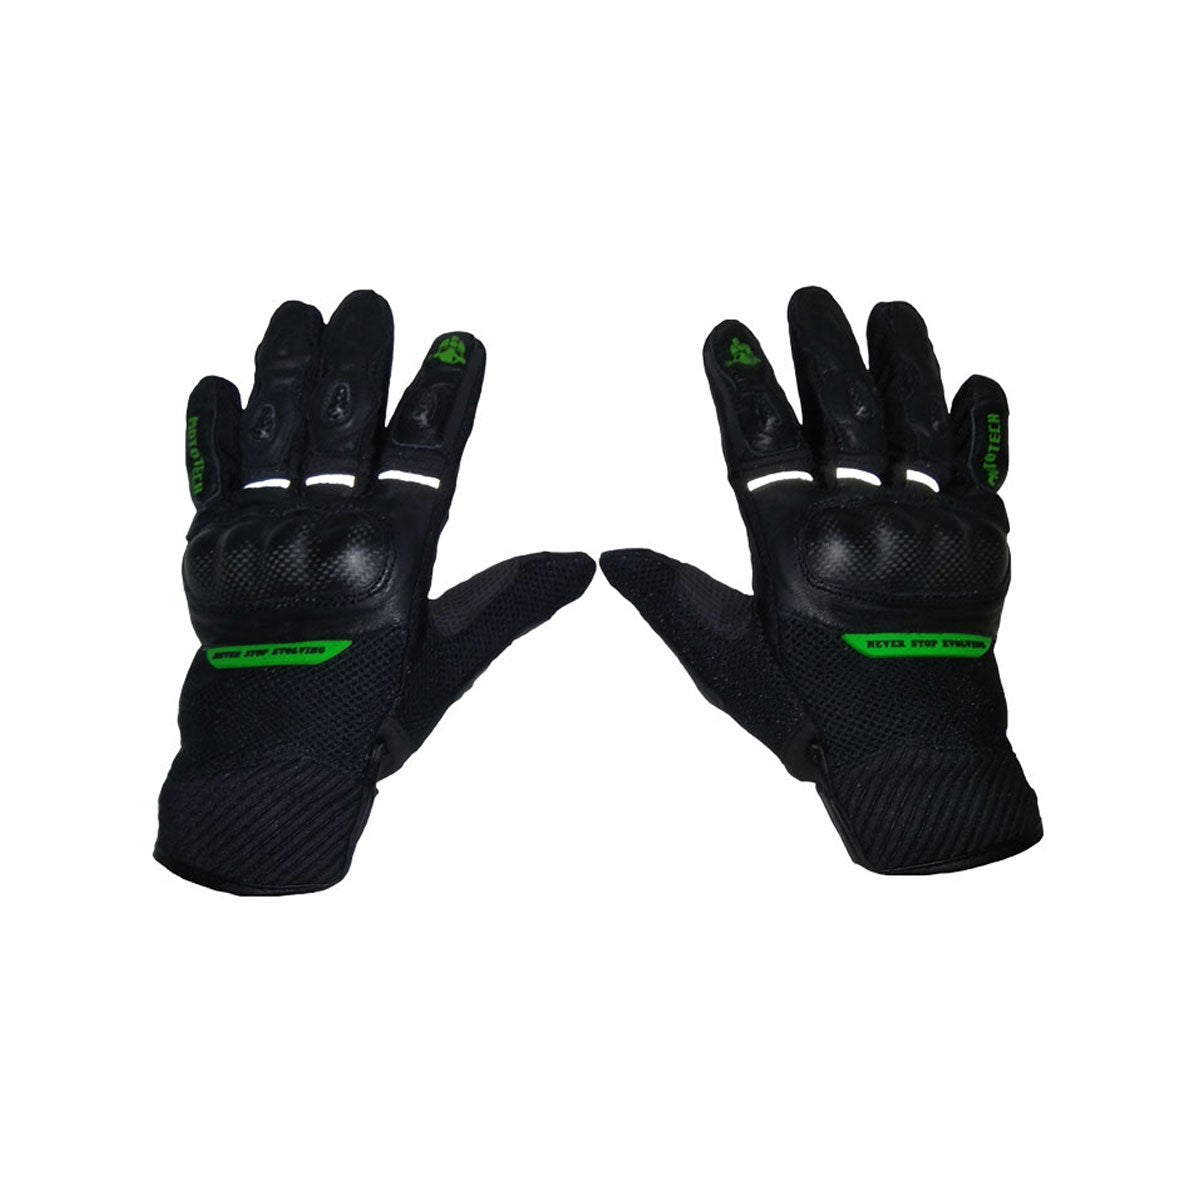 Urbane - Short Carbon Motorcycle Gloves 8